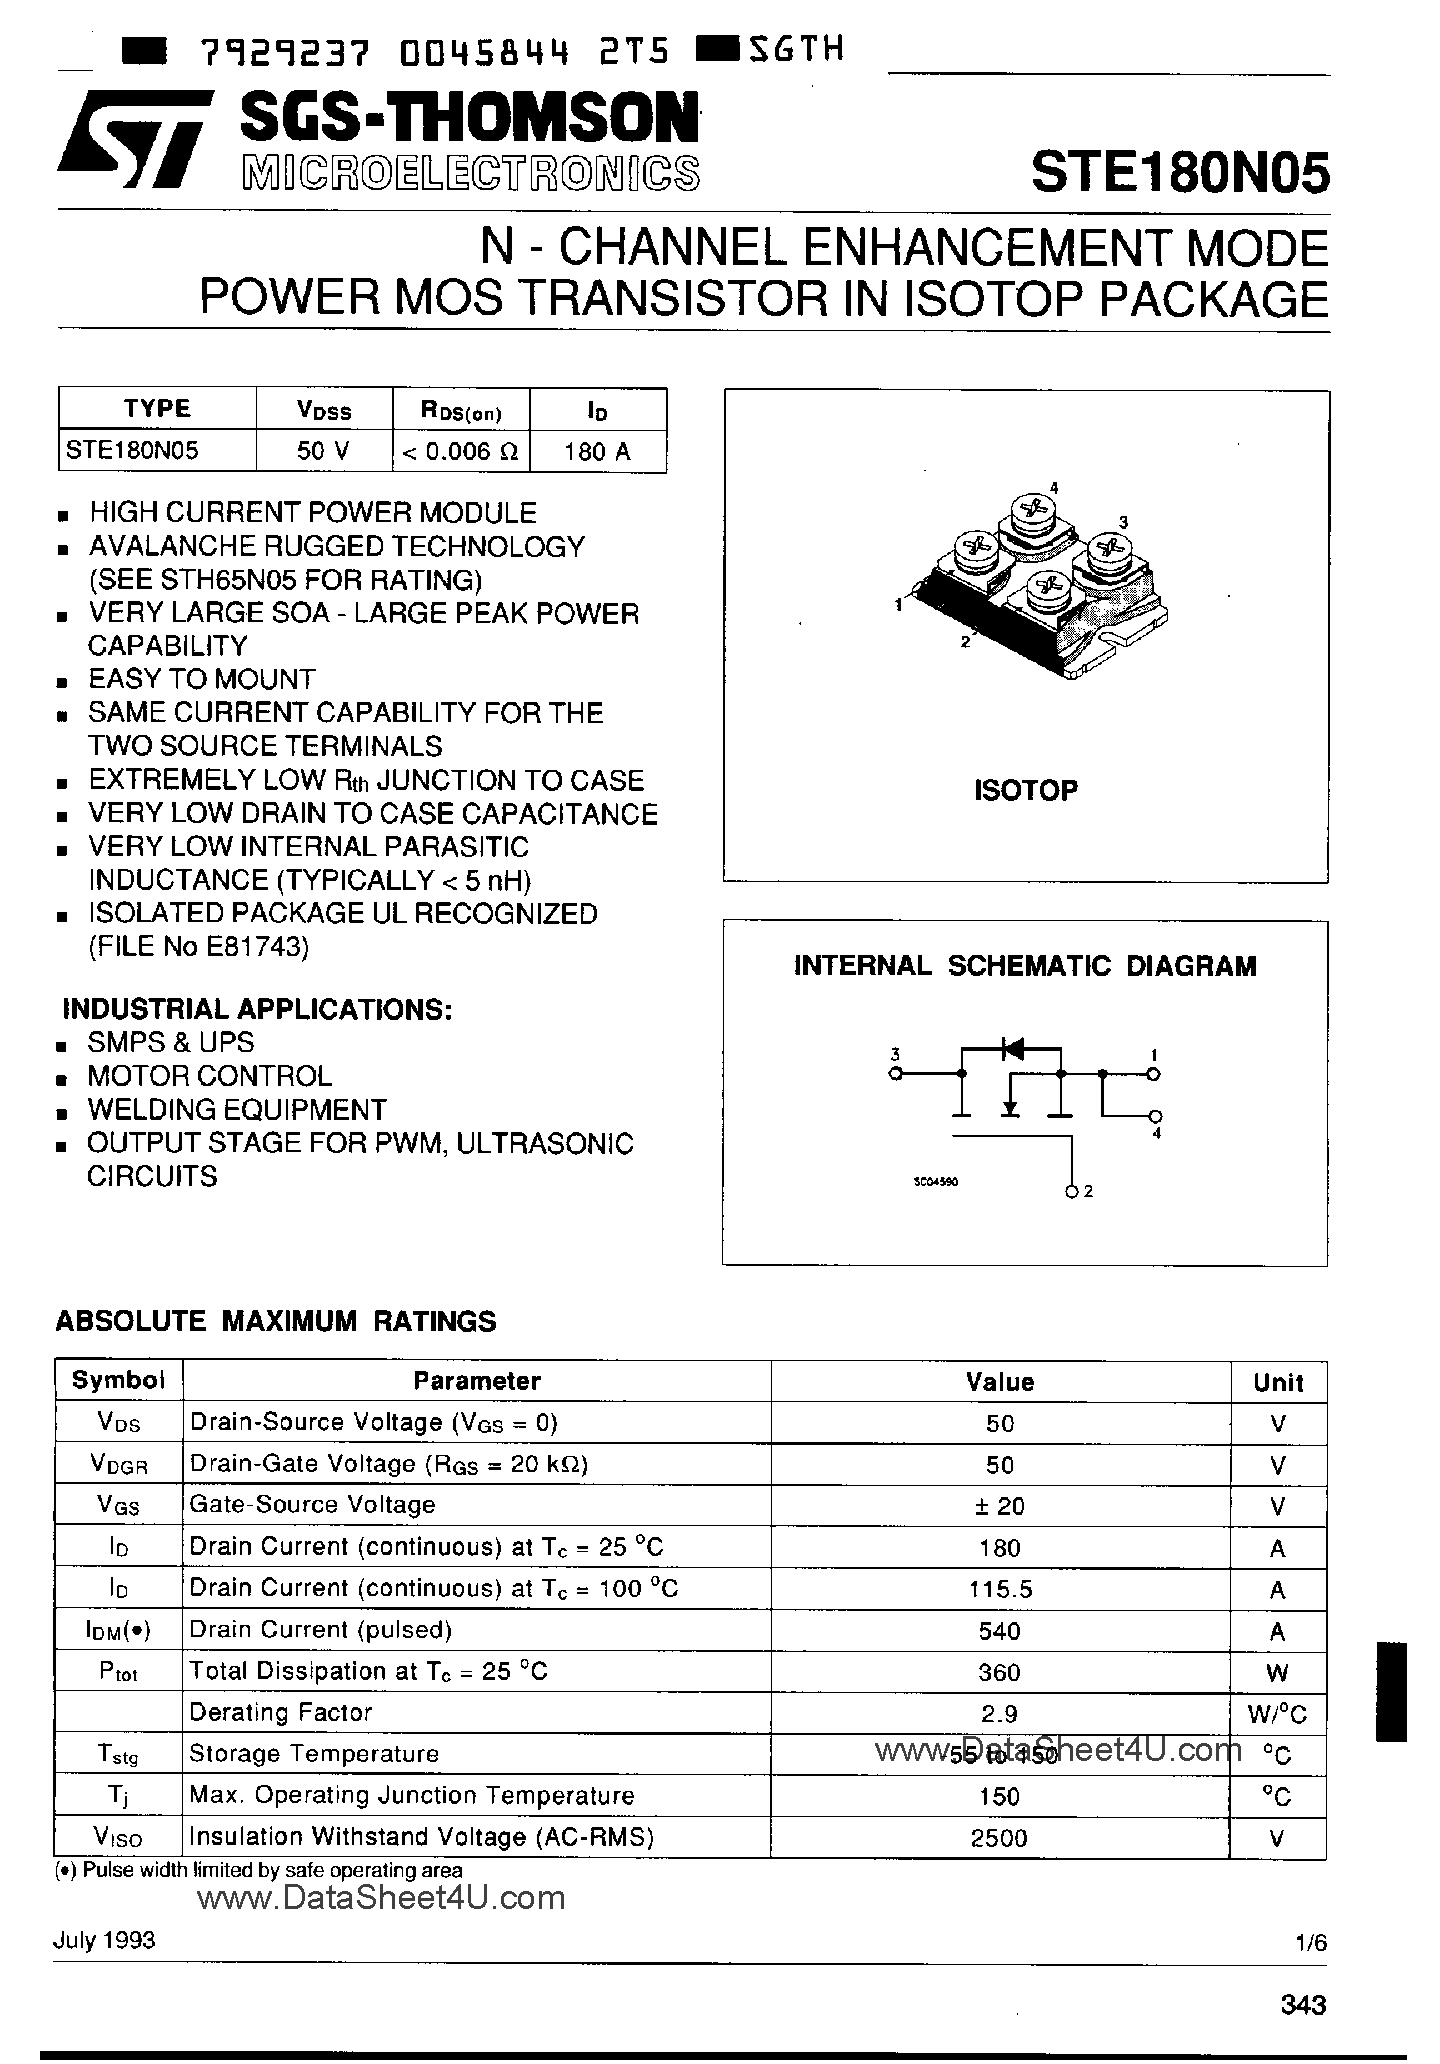 Datasheet STE180N05 - N-CHANNEL ENHANCEMENT MODE Power MOS Transistor page 1